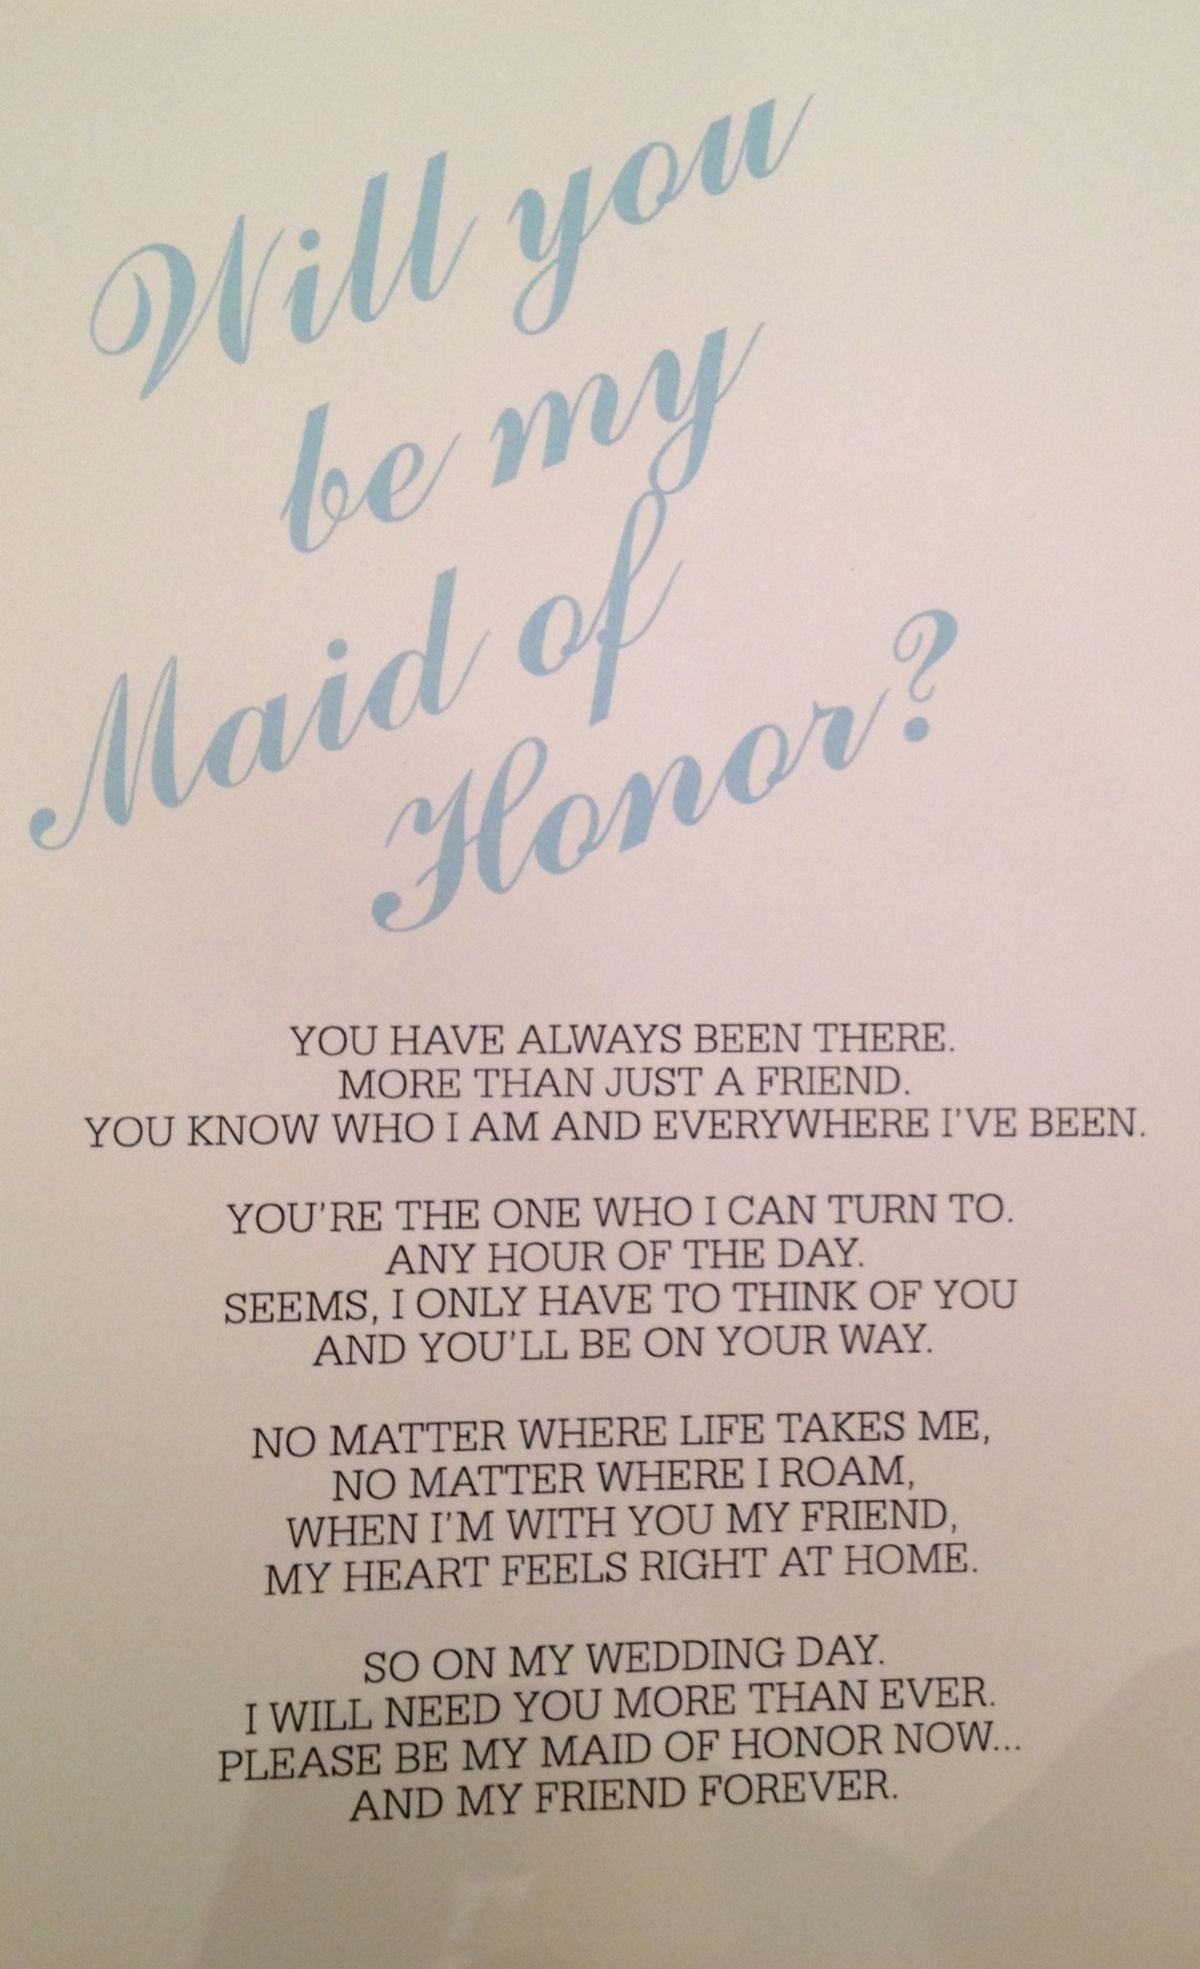 Maid Of Honor Proposal Letter Unique 80afa0bf9bfe6df635d1f467ad9c2dc5 1 200×1 969 Pixels